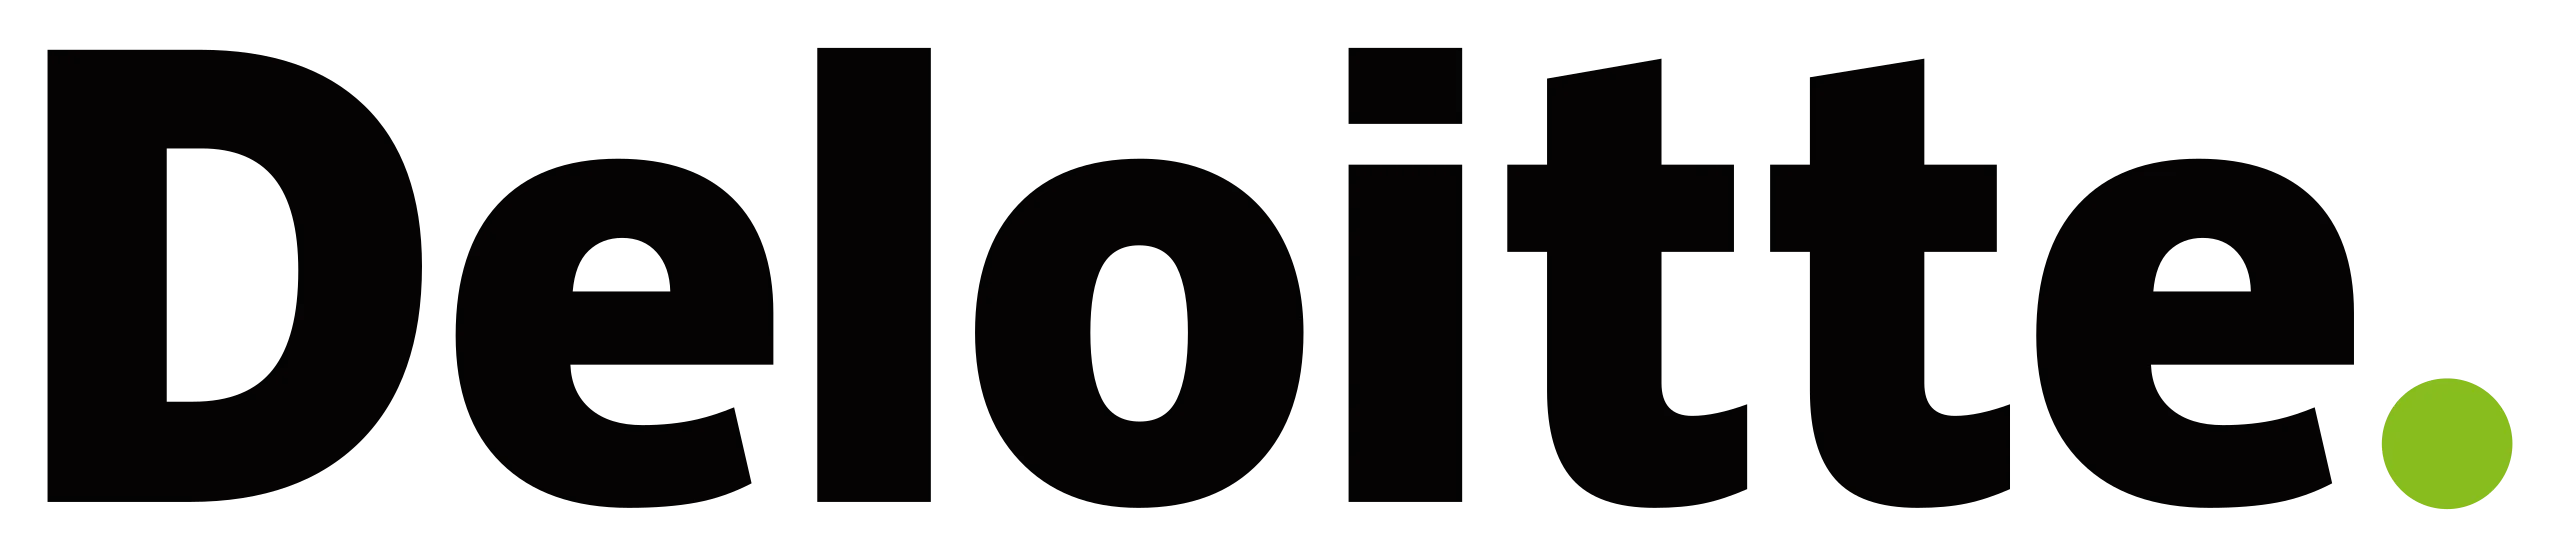 Logo của Deloitte